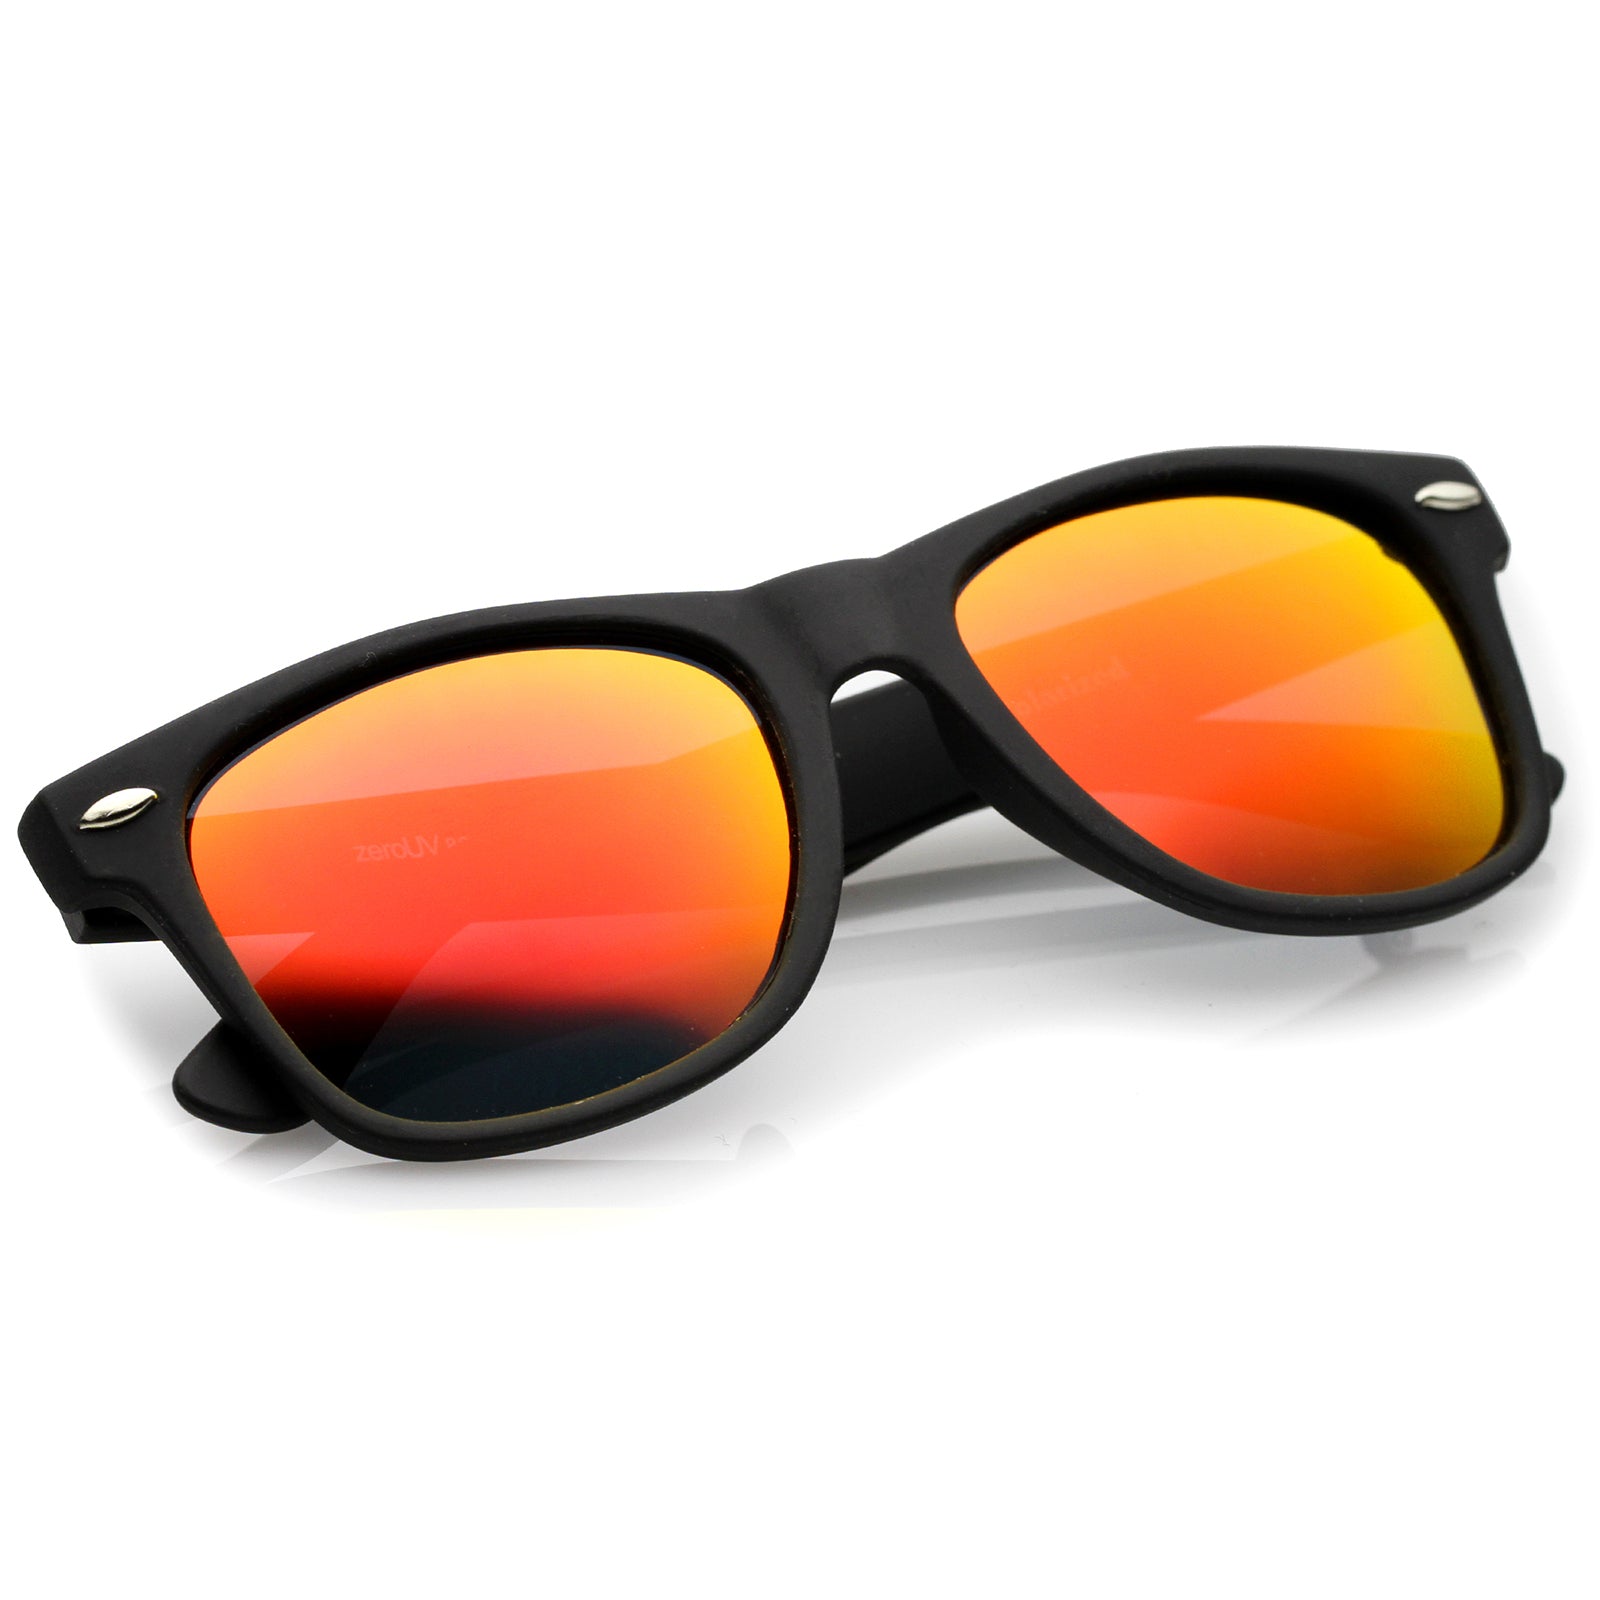 Sunglasses Rimmed Polarized Mirror Frame Square 5 Rubberized Horn Lens